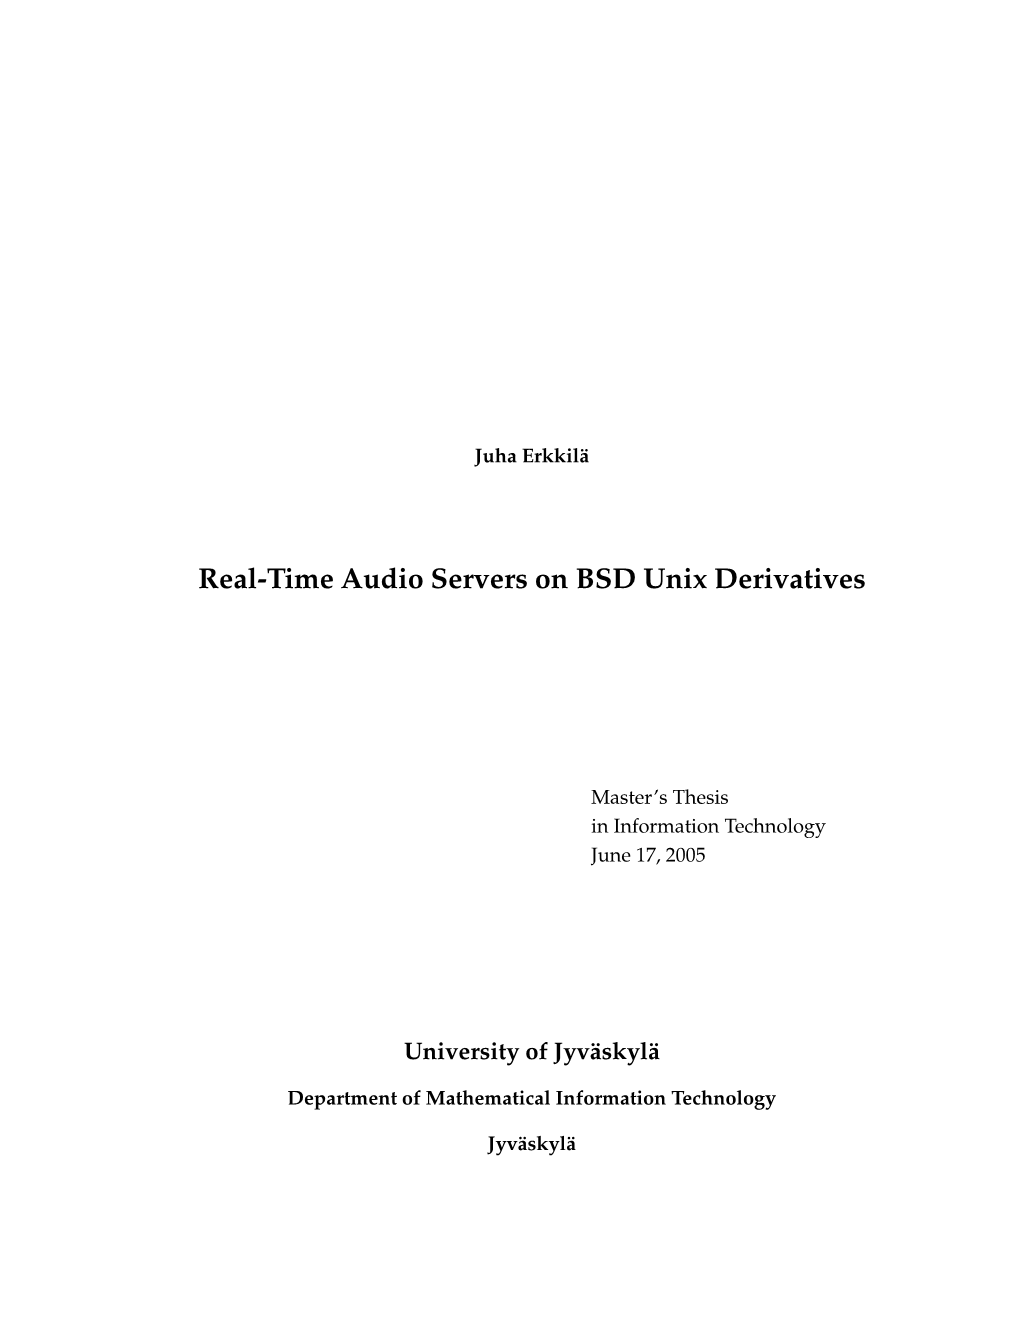 Real-Time Audio Servers on BSD Unix Derivatives